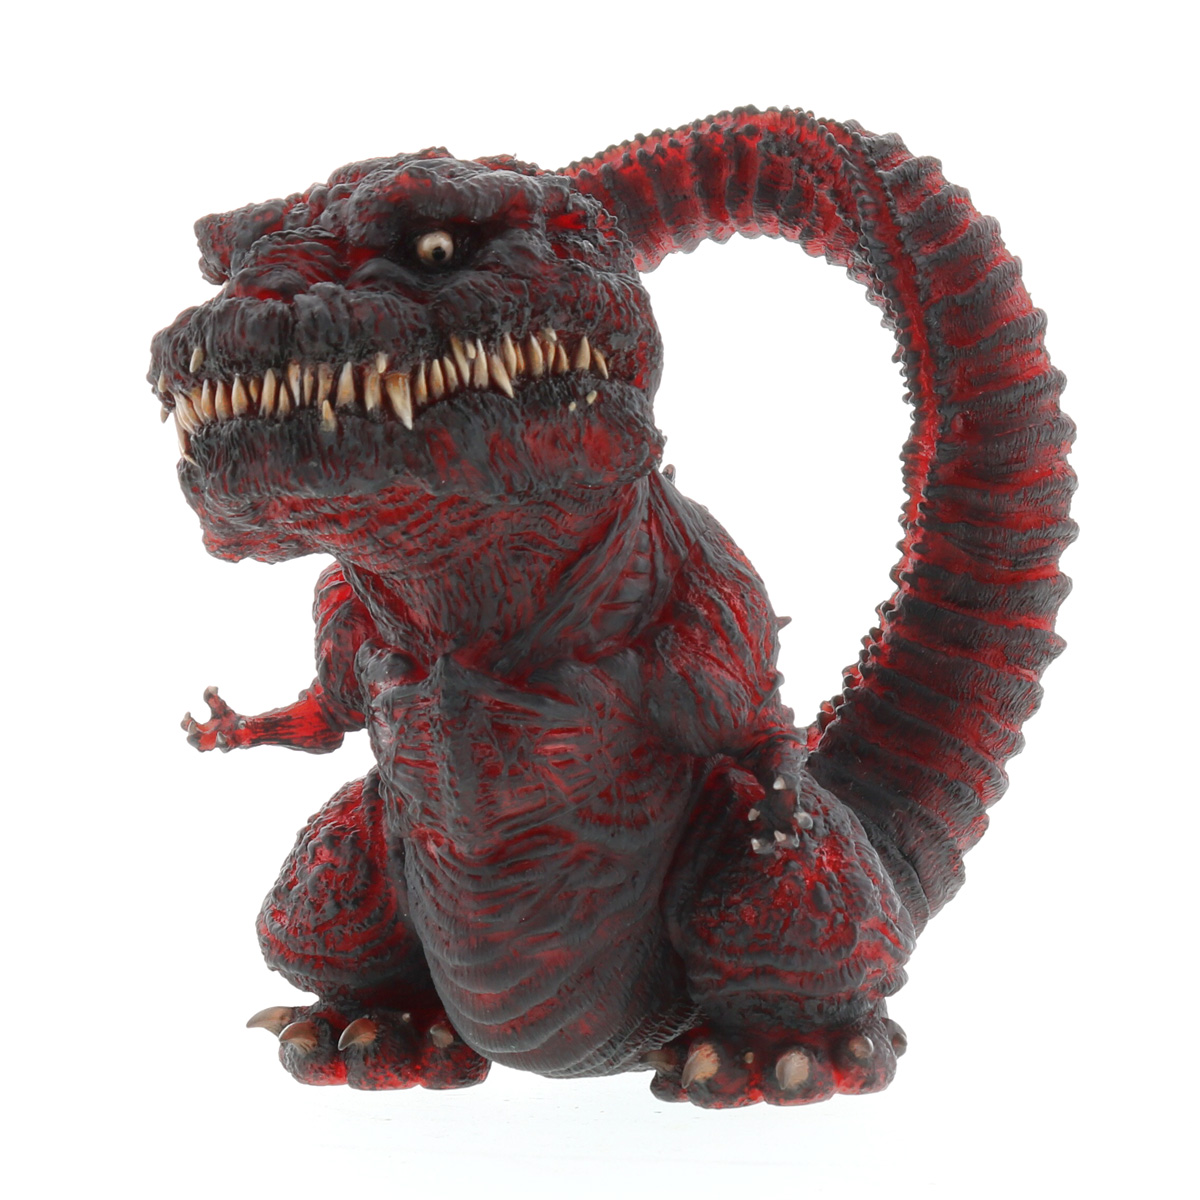 Set figure X-PLUS 16cm 2016 second third form clear Ver Details about   Deforeal Godzilla 